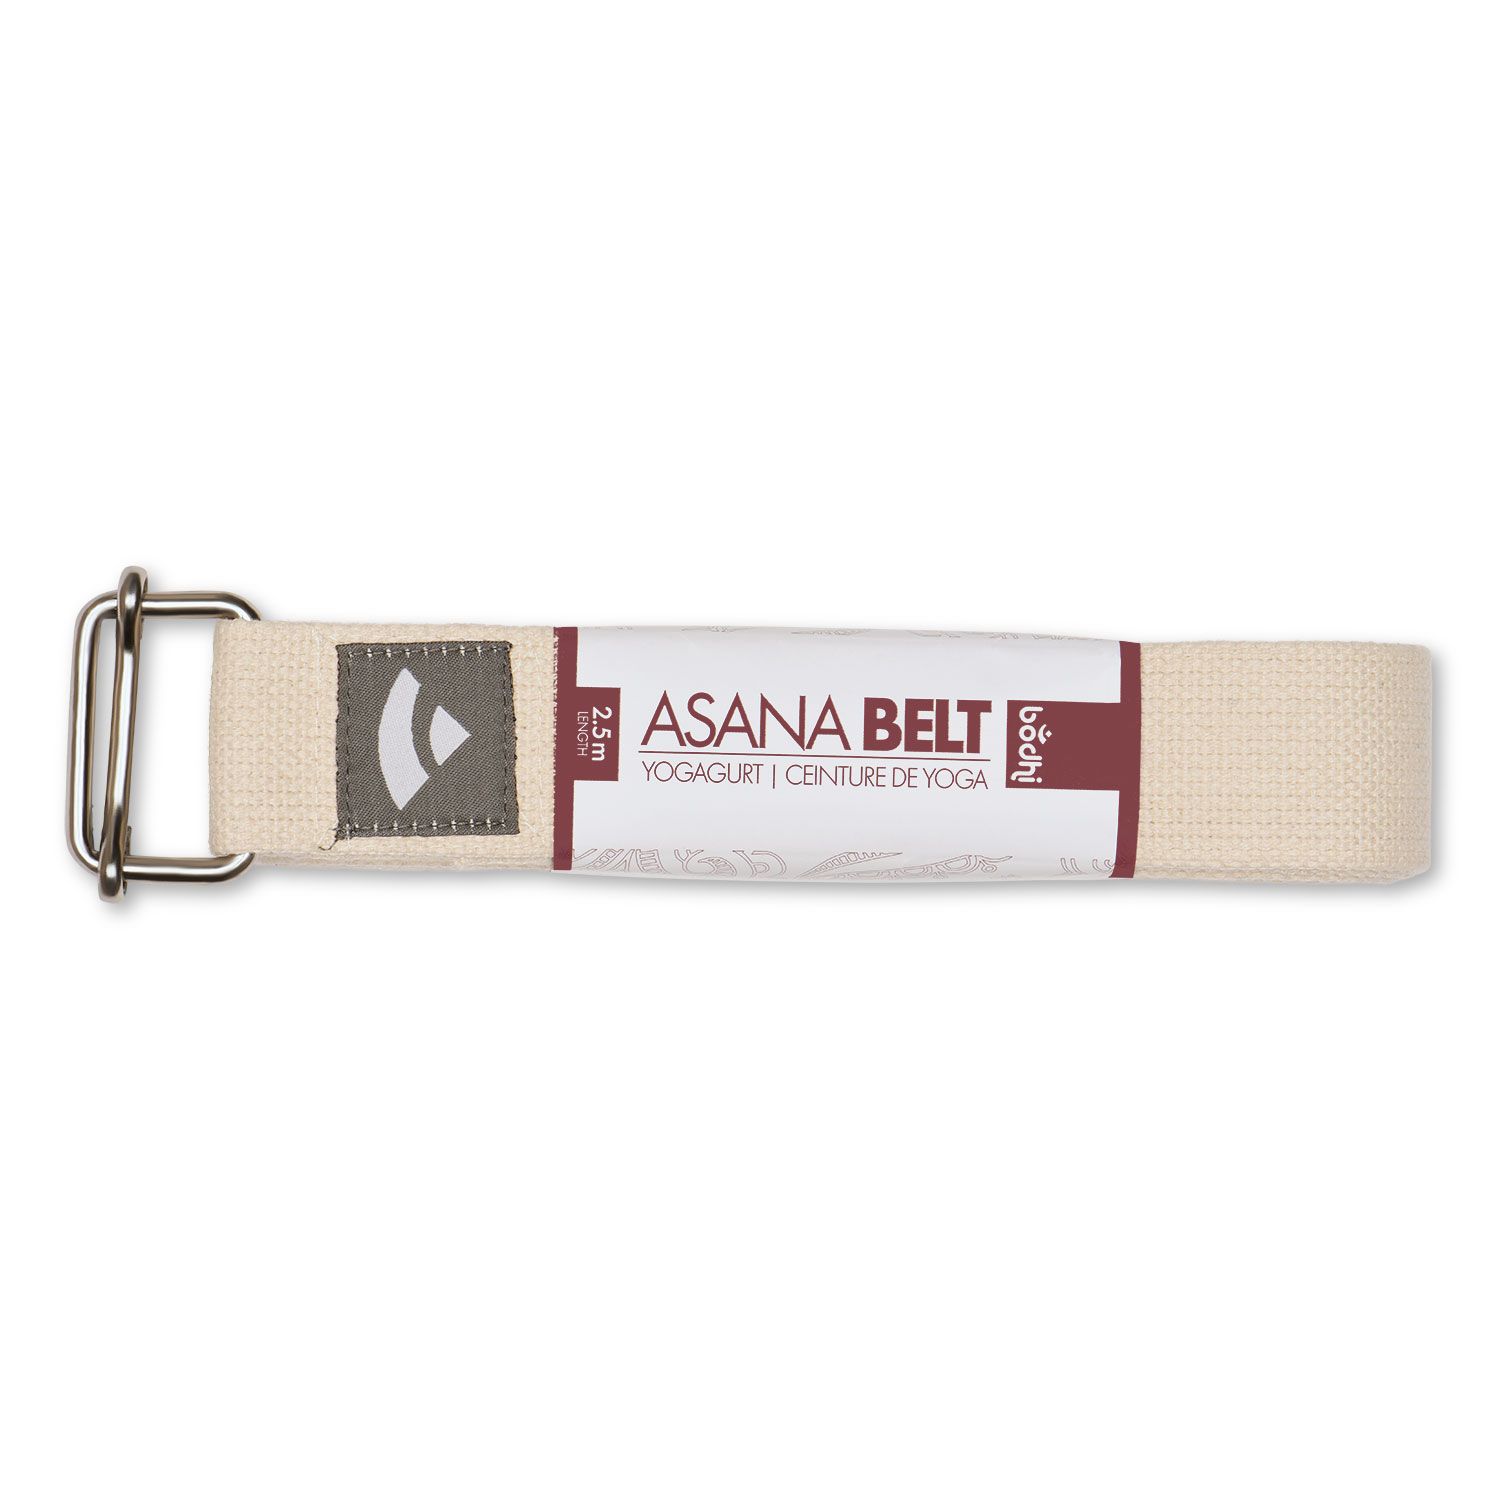 Yogagurt Asana Belt, Schiebeschnalle Baumwolle natur 910-SN